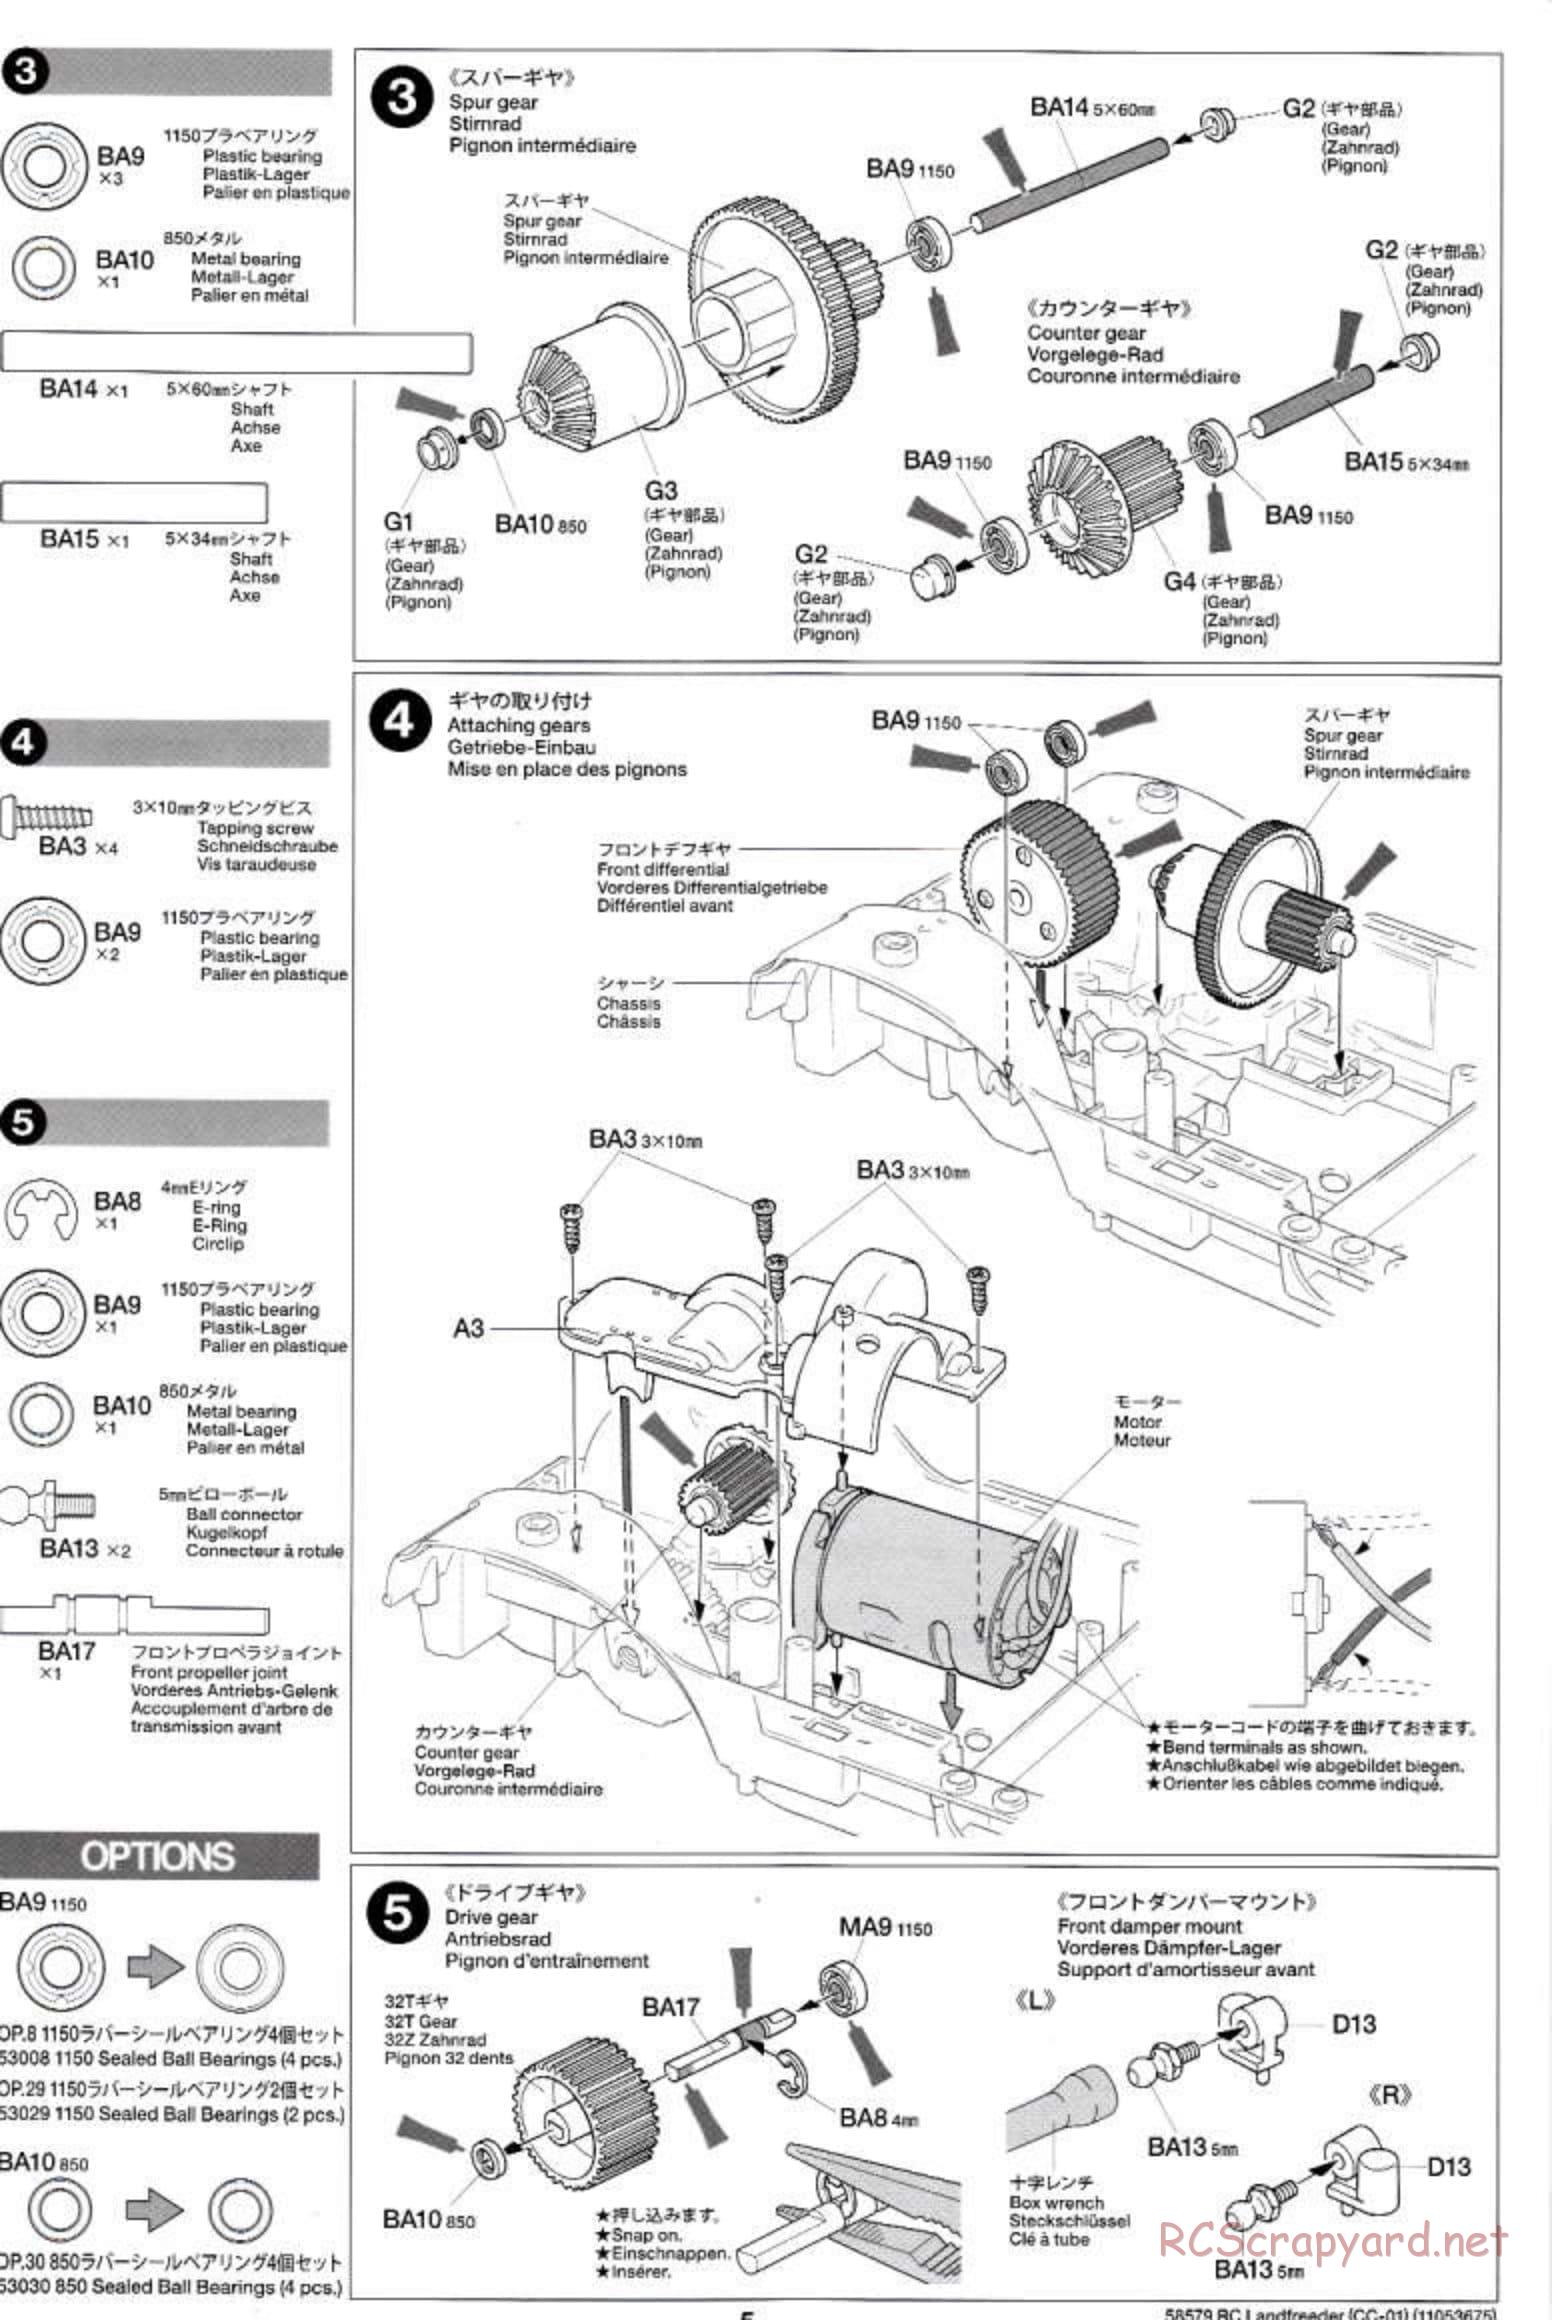 Tamiya - LandFreeder - CC-01 Chassis - Manual - Page 5